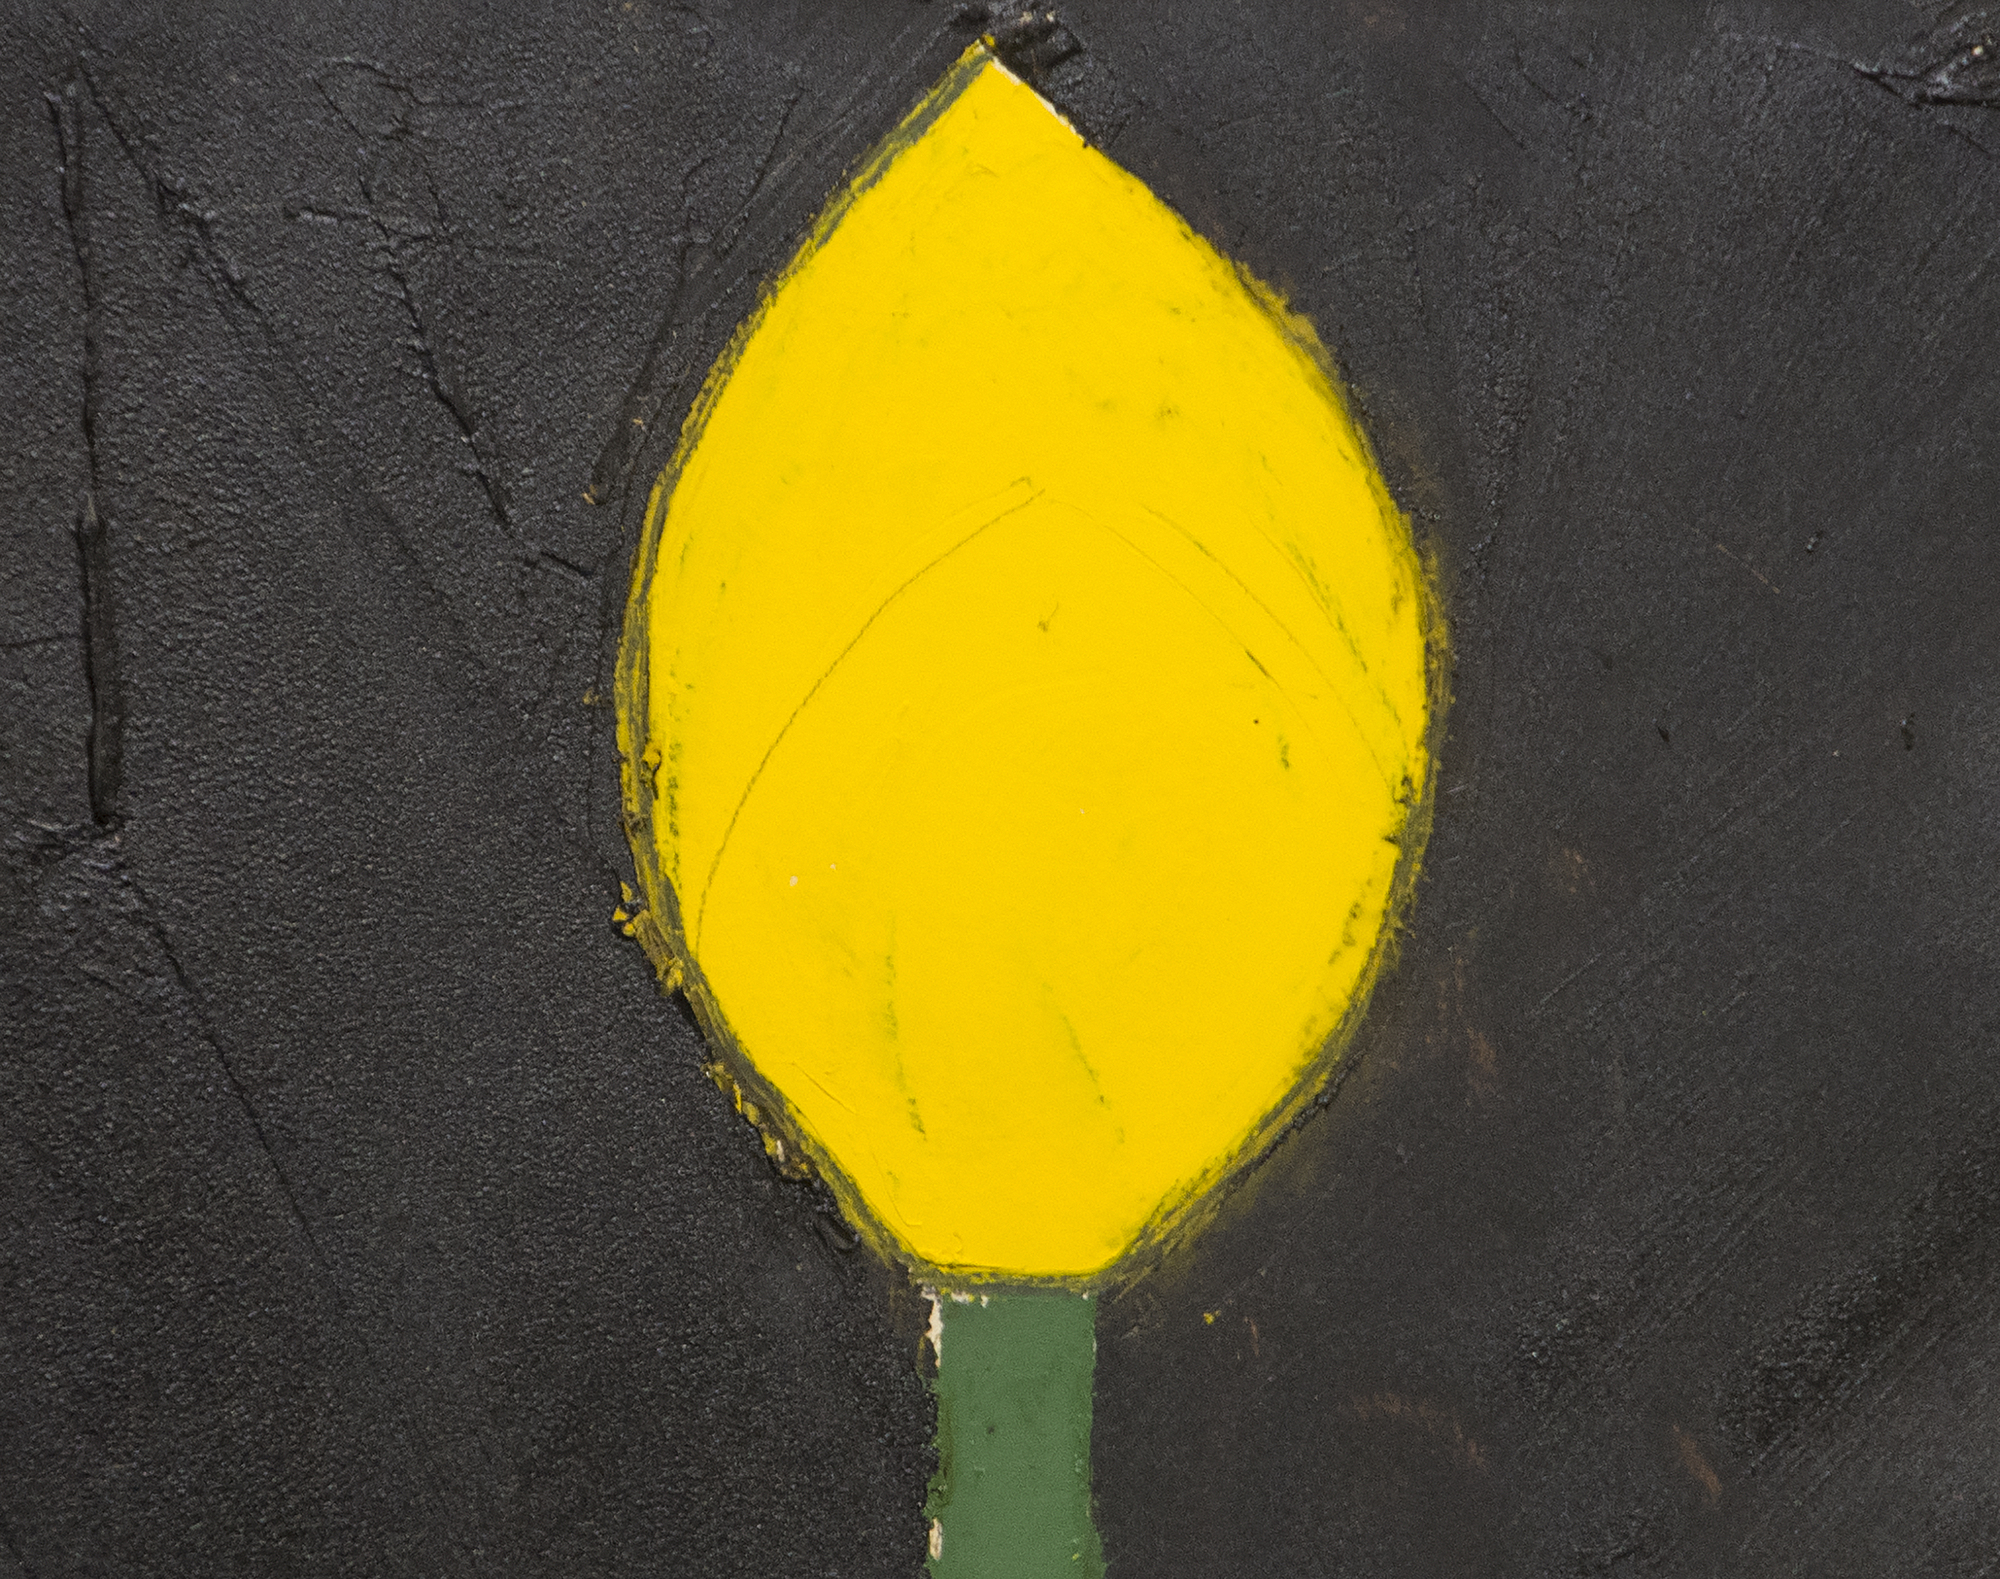 DONALD SULTAN - Tulipe jaune n° 18 - huile et goudron sur papier - 20 x 20 in.